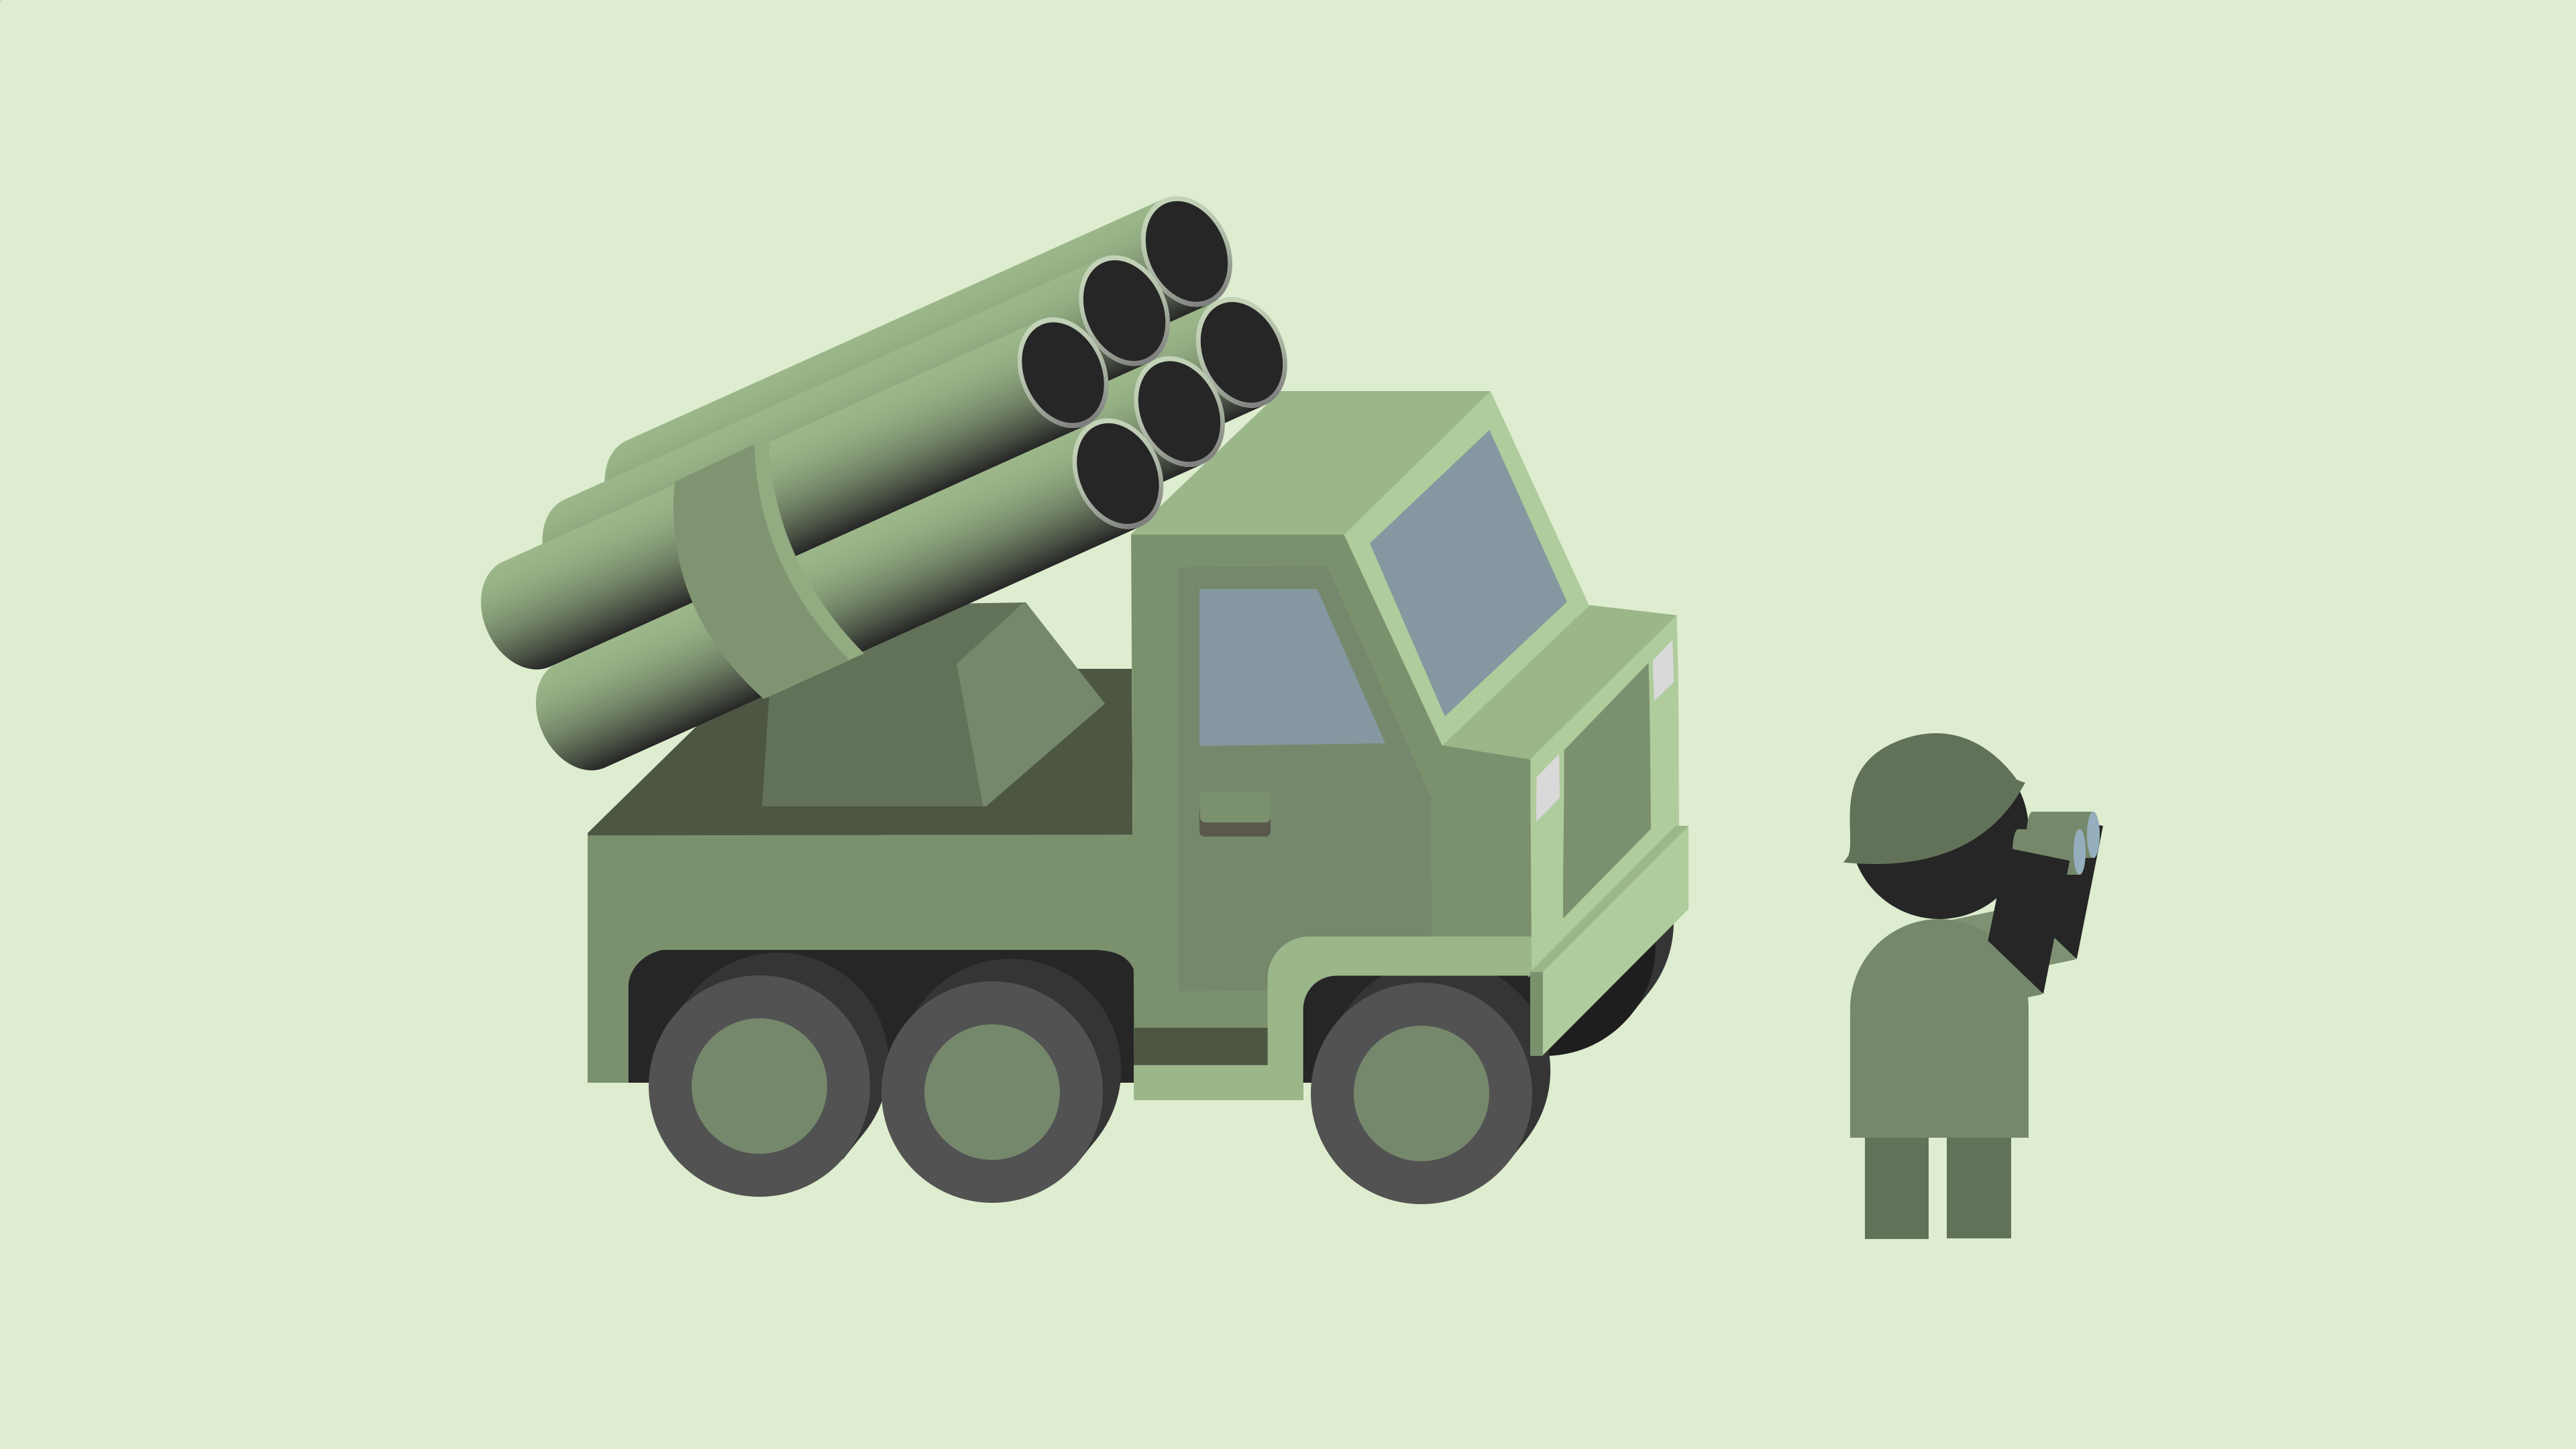 A Katyusha-like rocket launcher